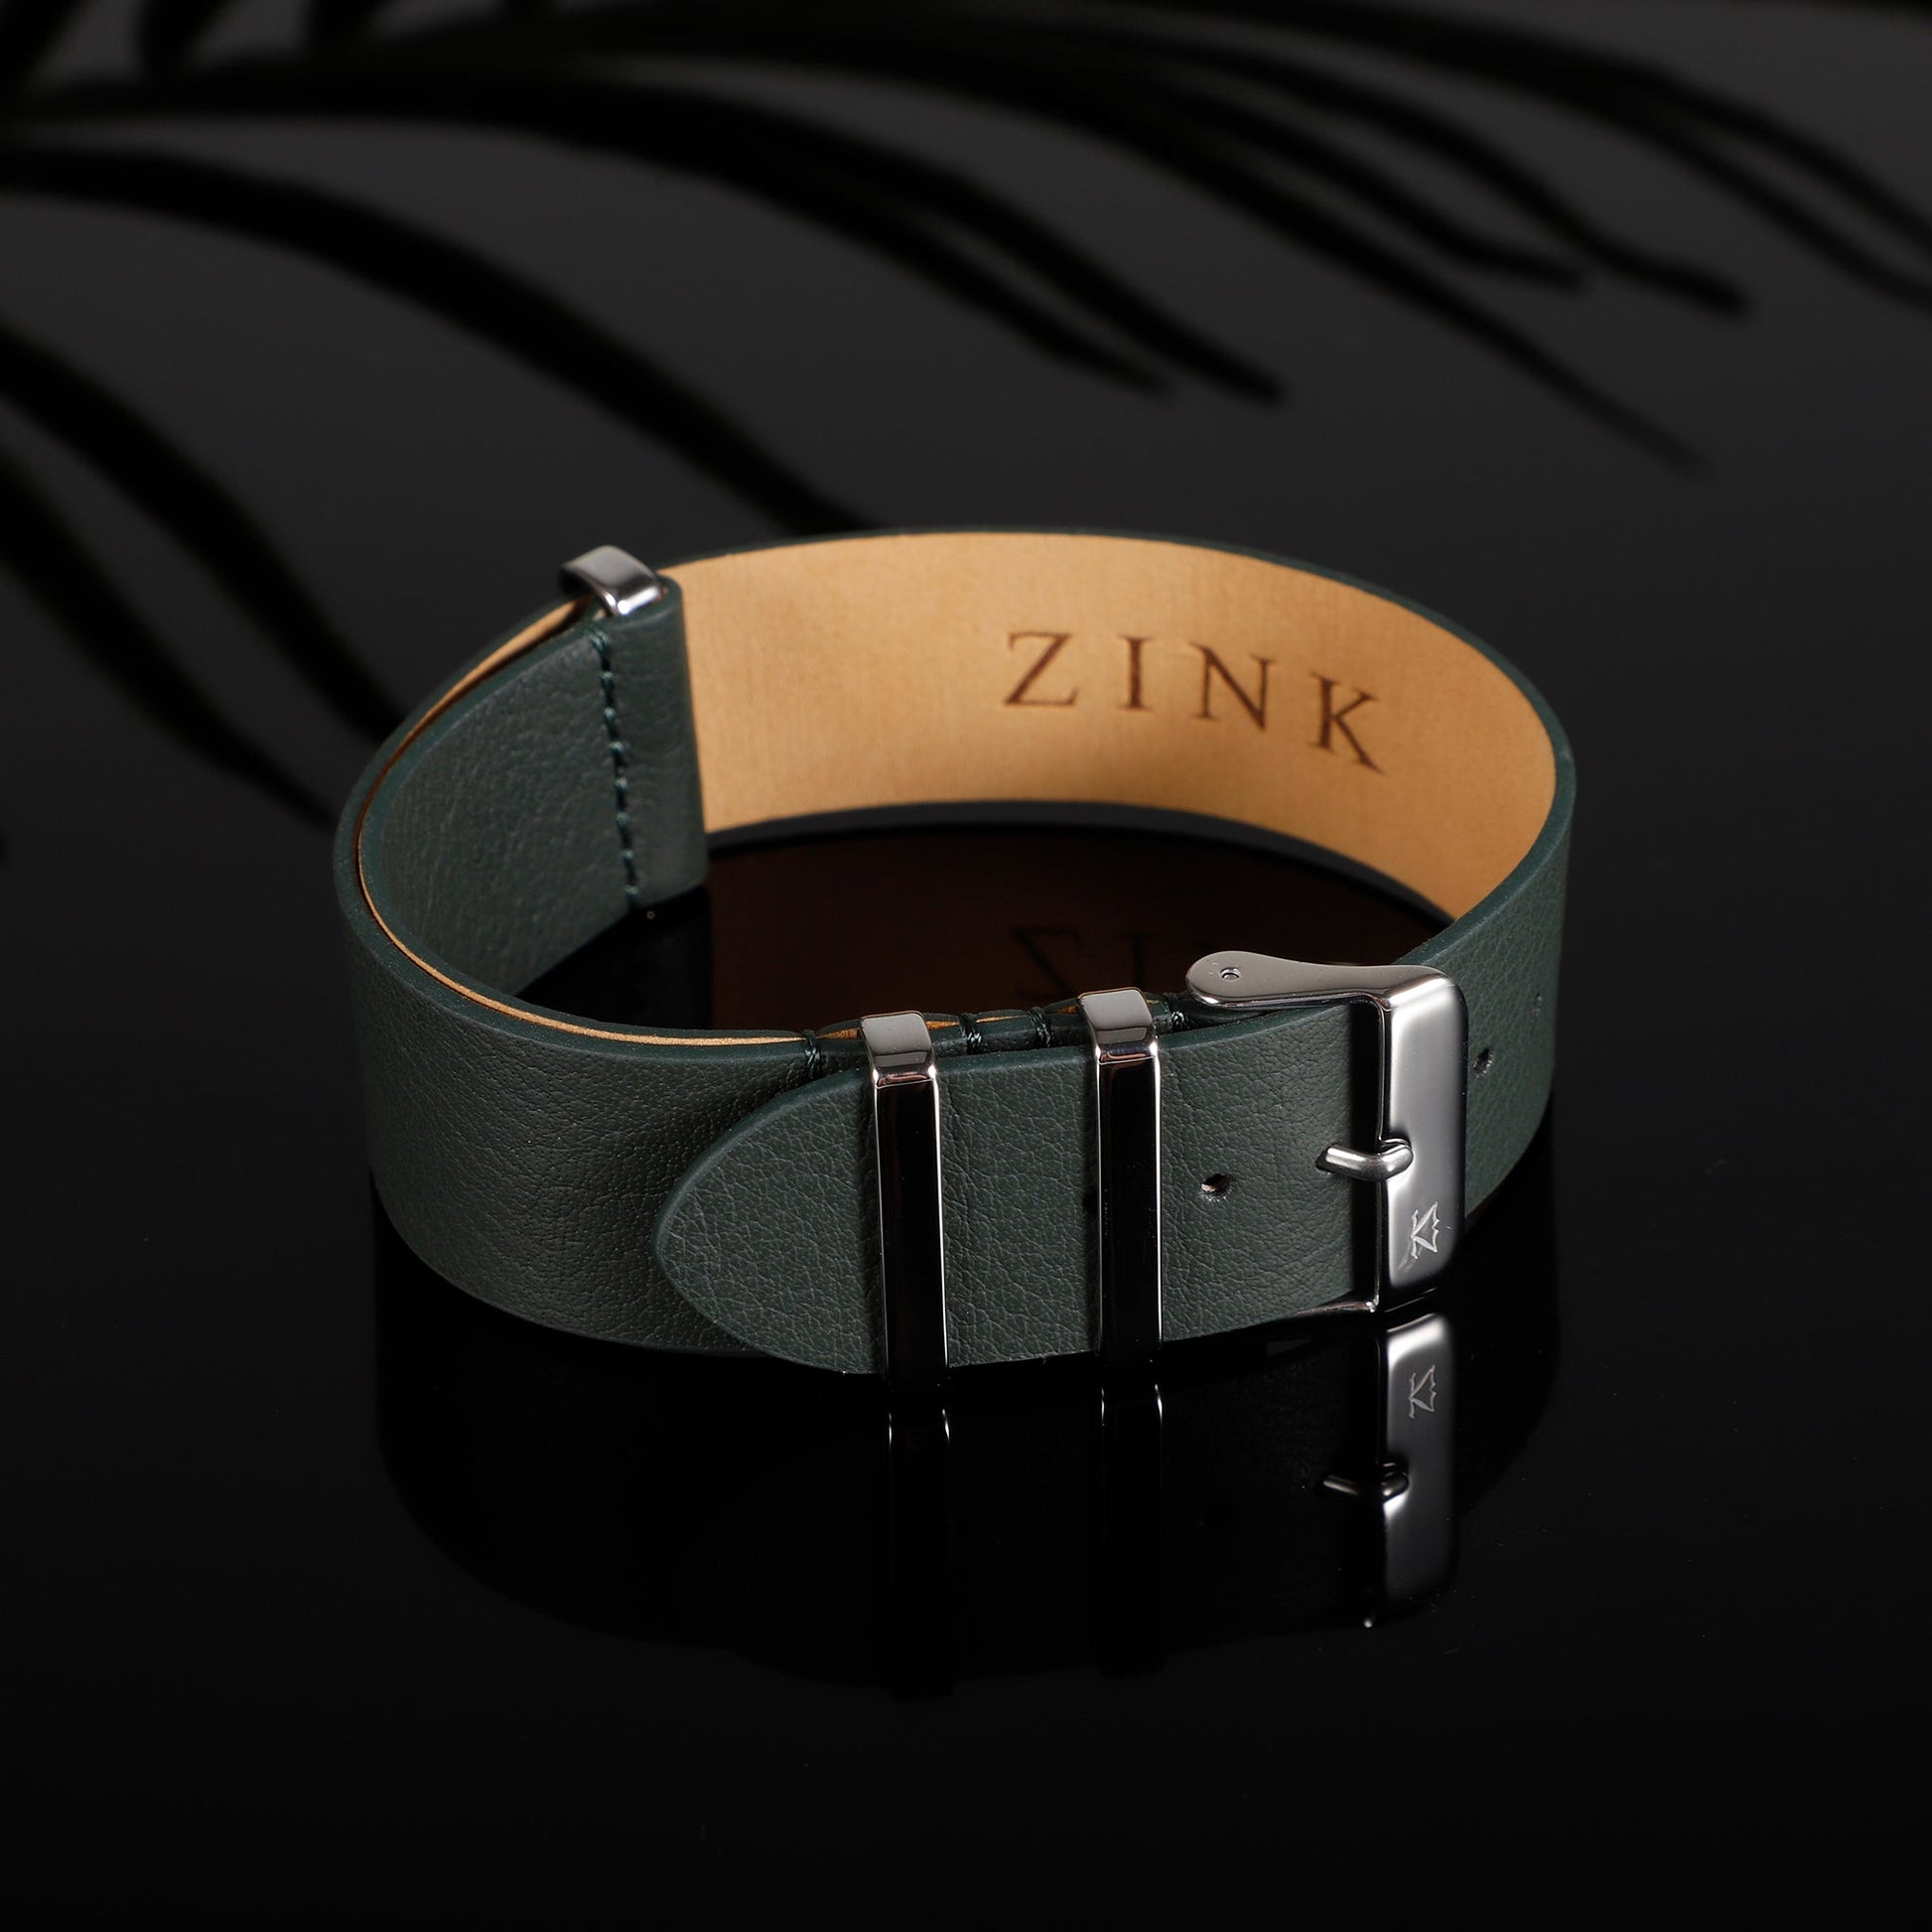 ZLB001DGB Zink Men's Textured Genuine Leather Strap